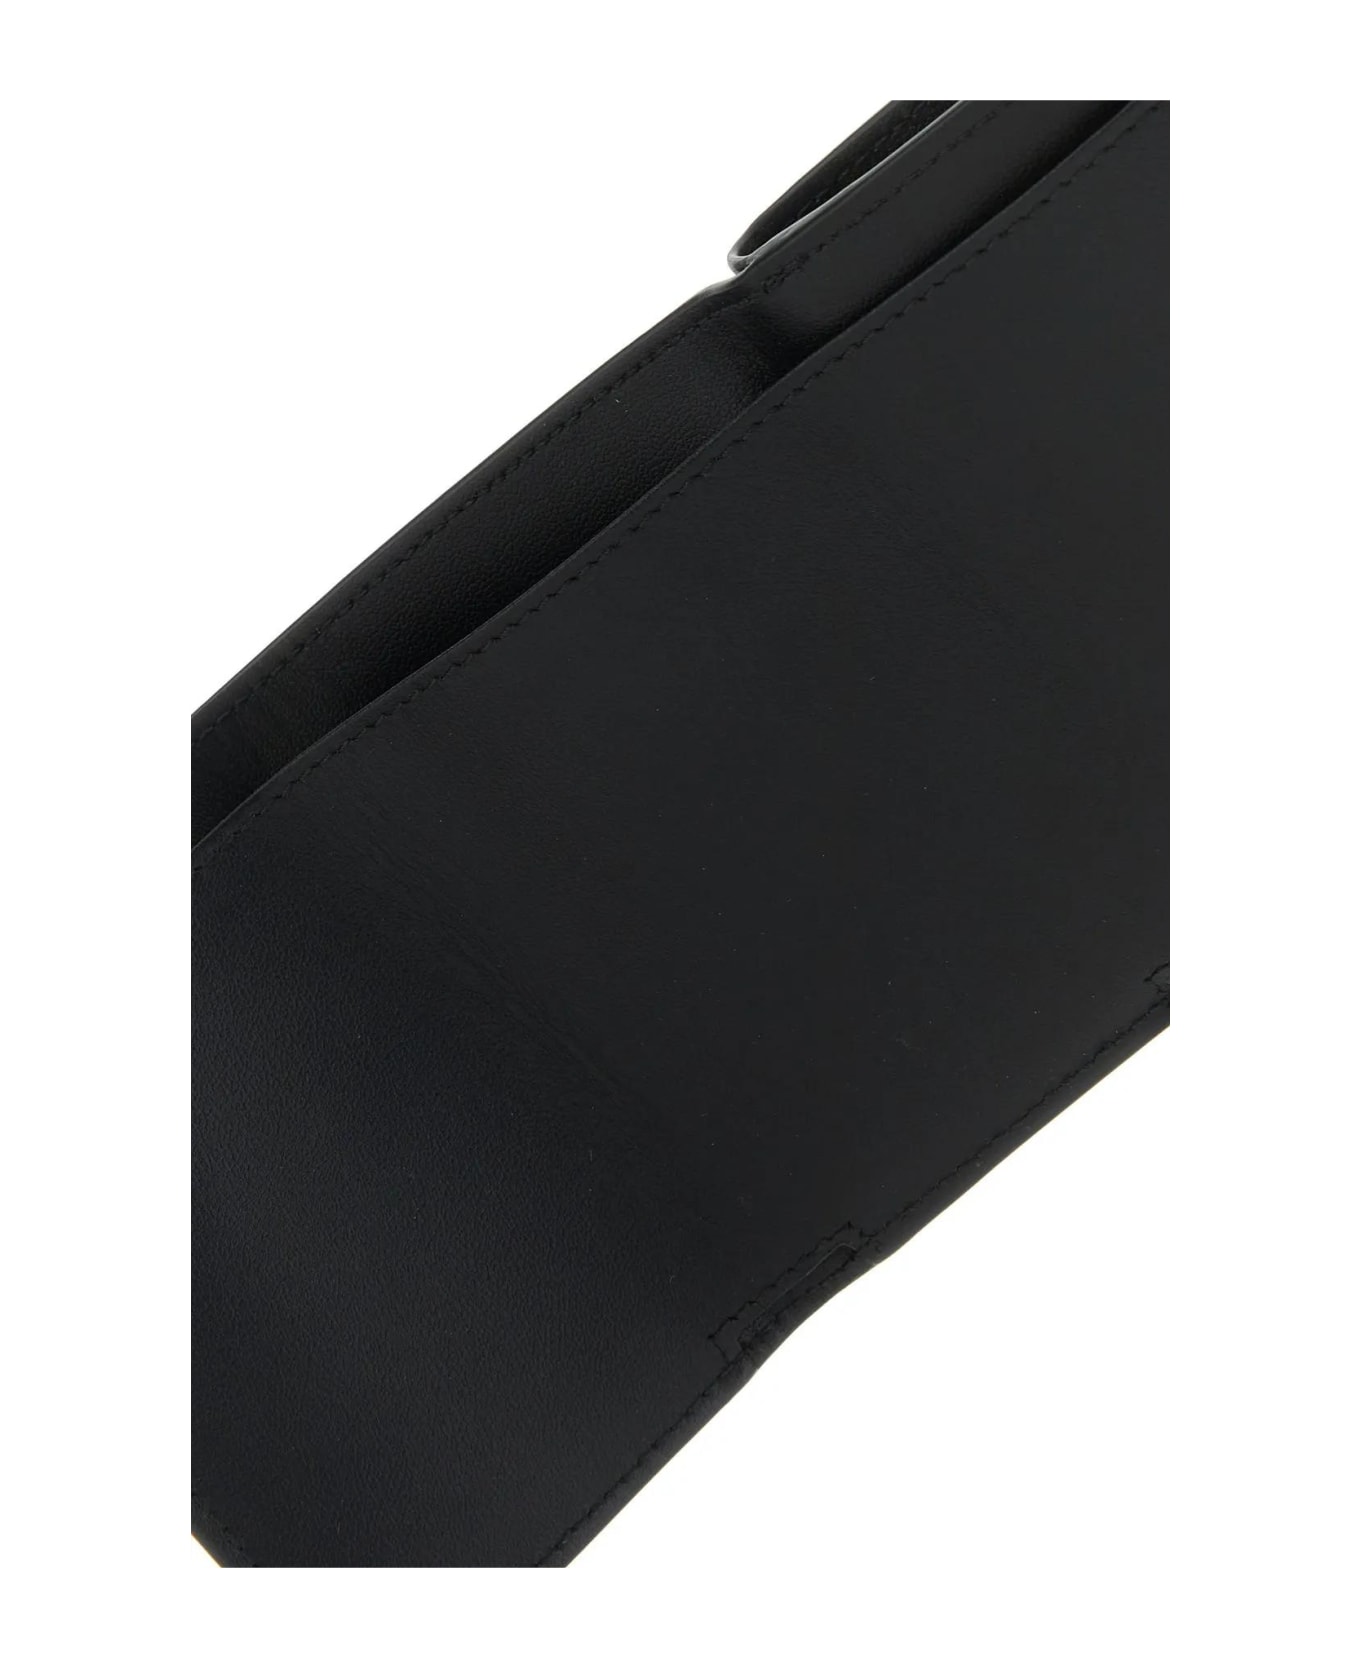 Dolce & Gabbana Black Leather Wallet - Black 財布